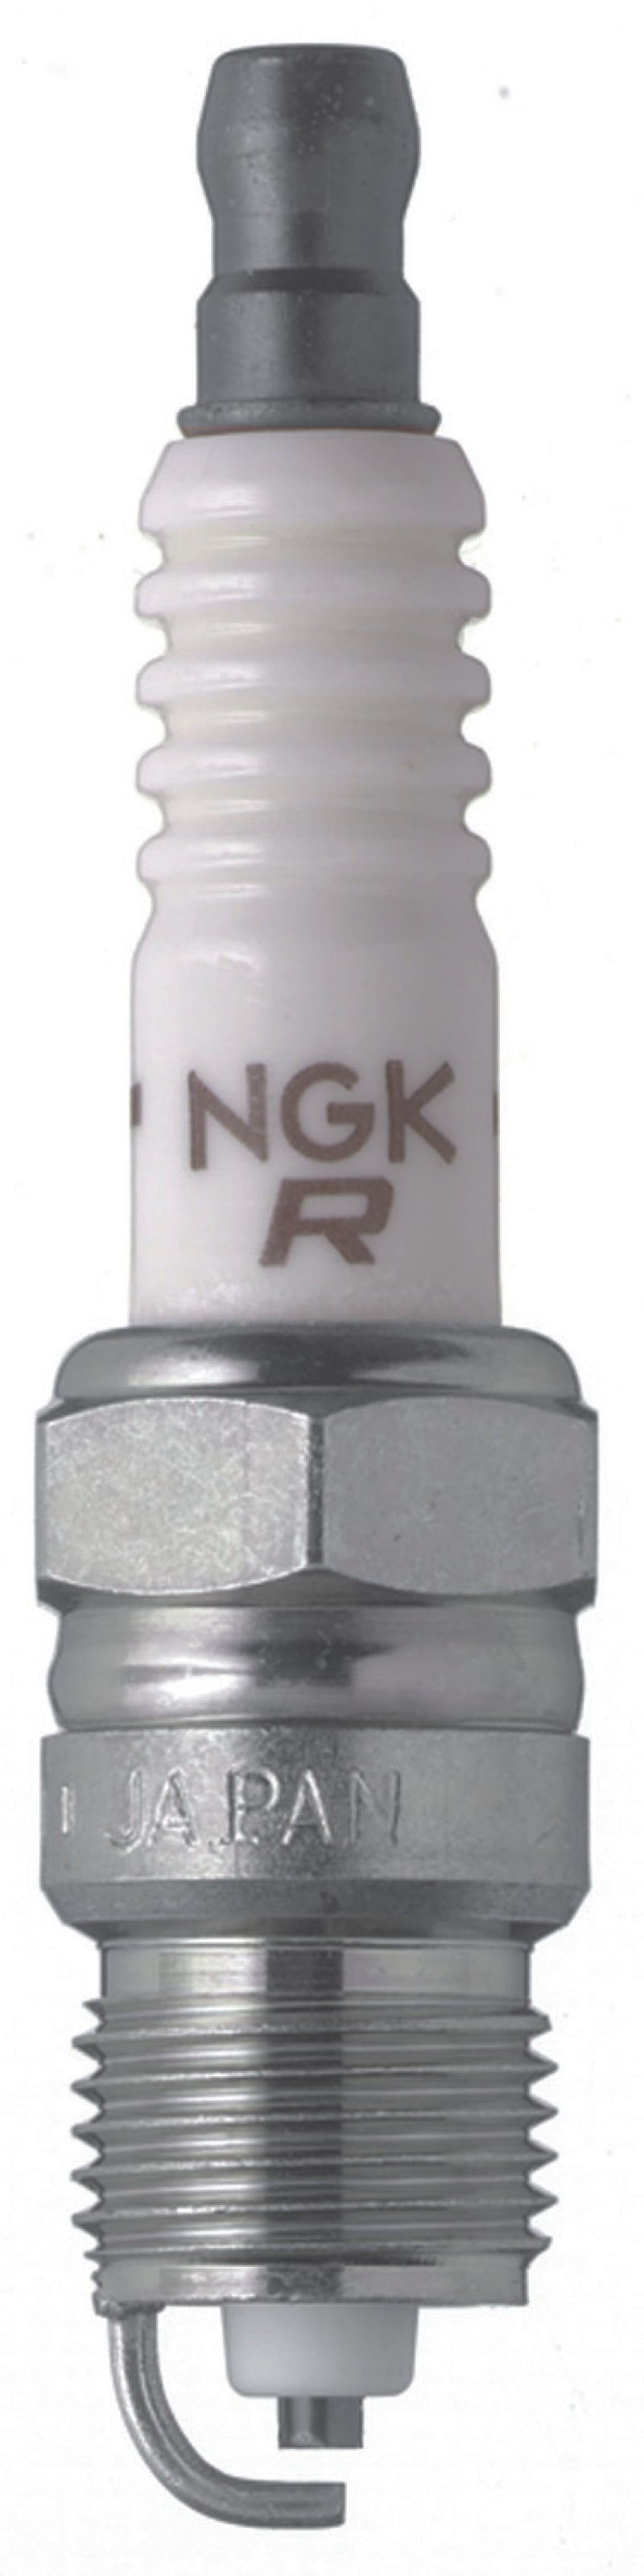 NGK V-Power Spark Plug Box of 4 (UR45)